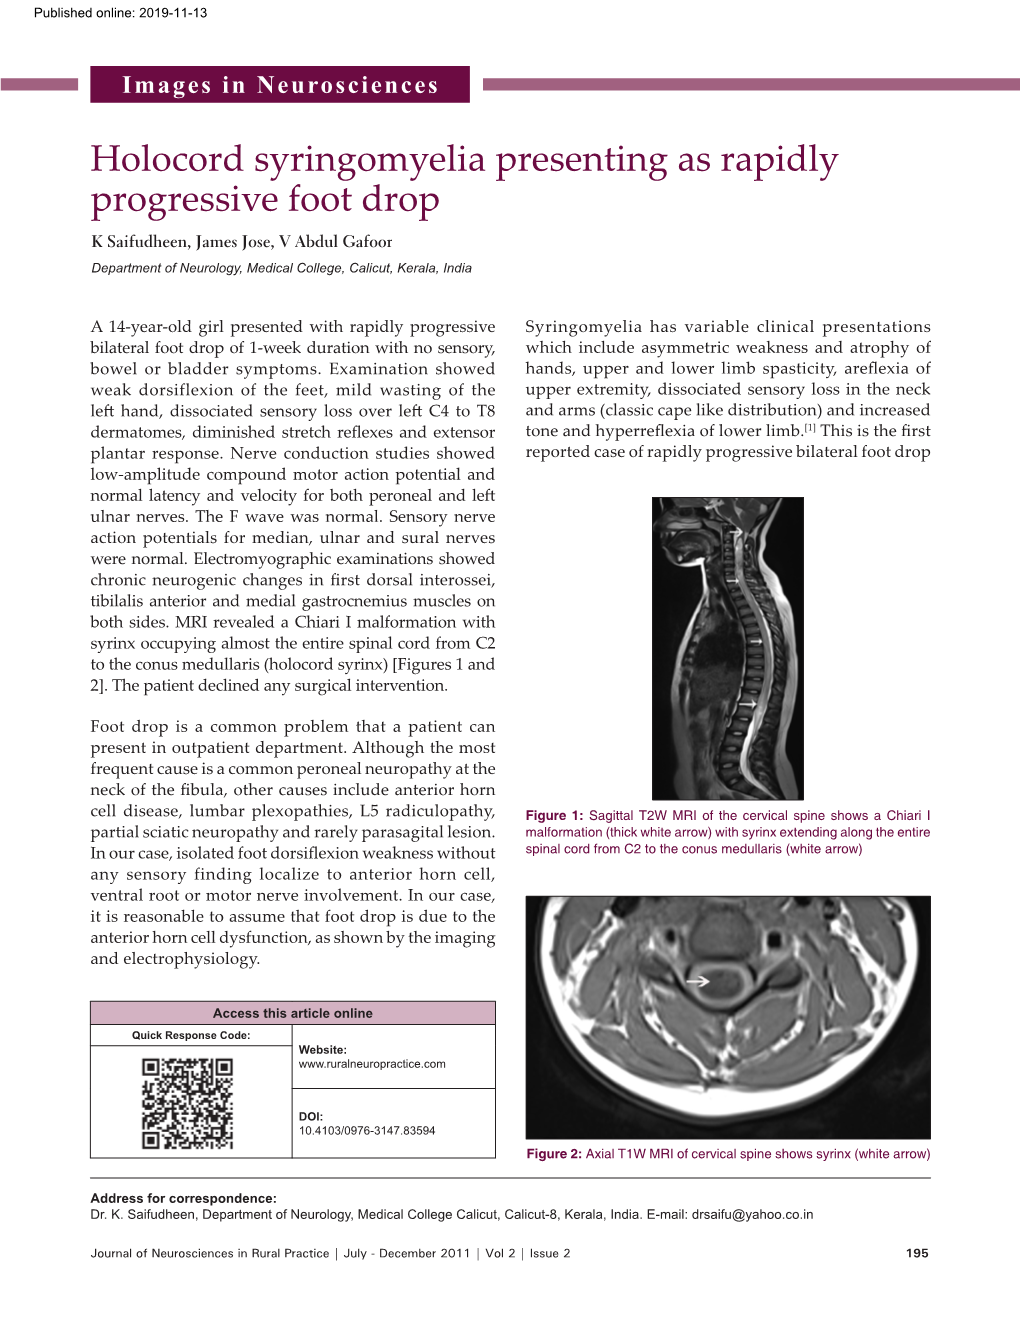 Holocord Syringomyelia Presenting As Rapidly Progressive Foot Drop